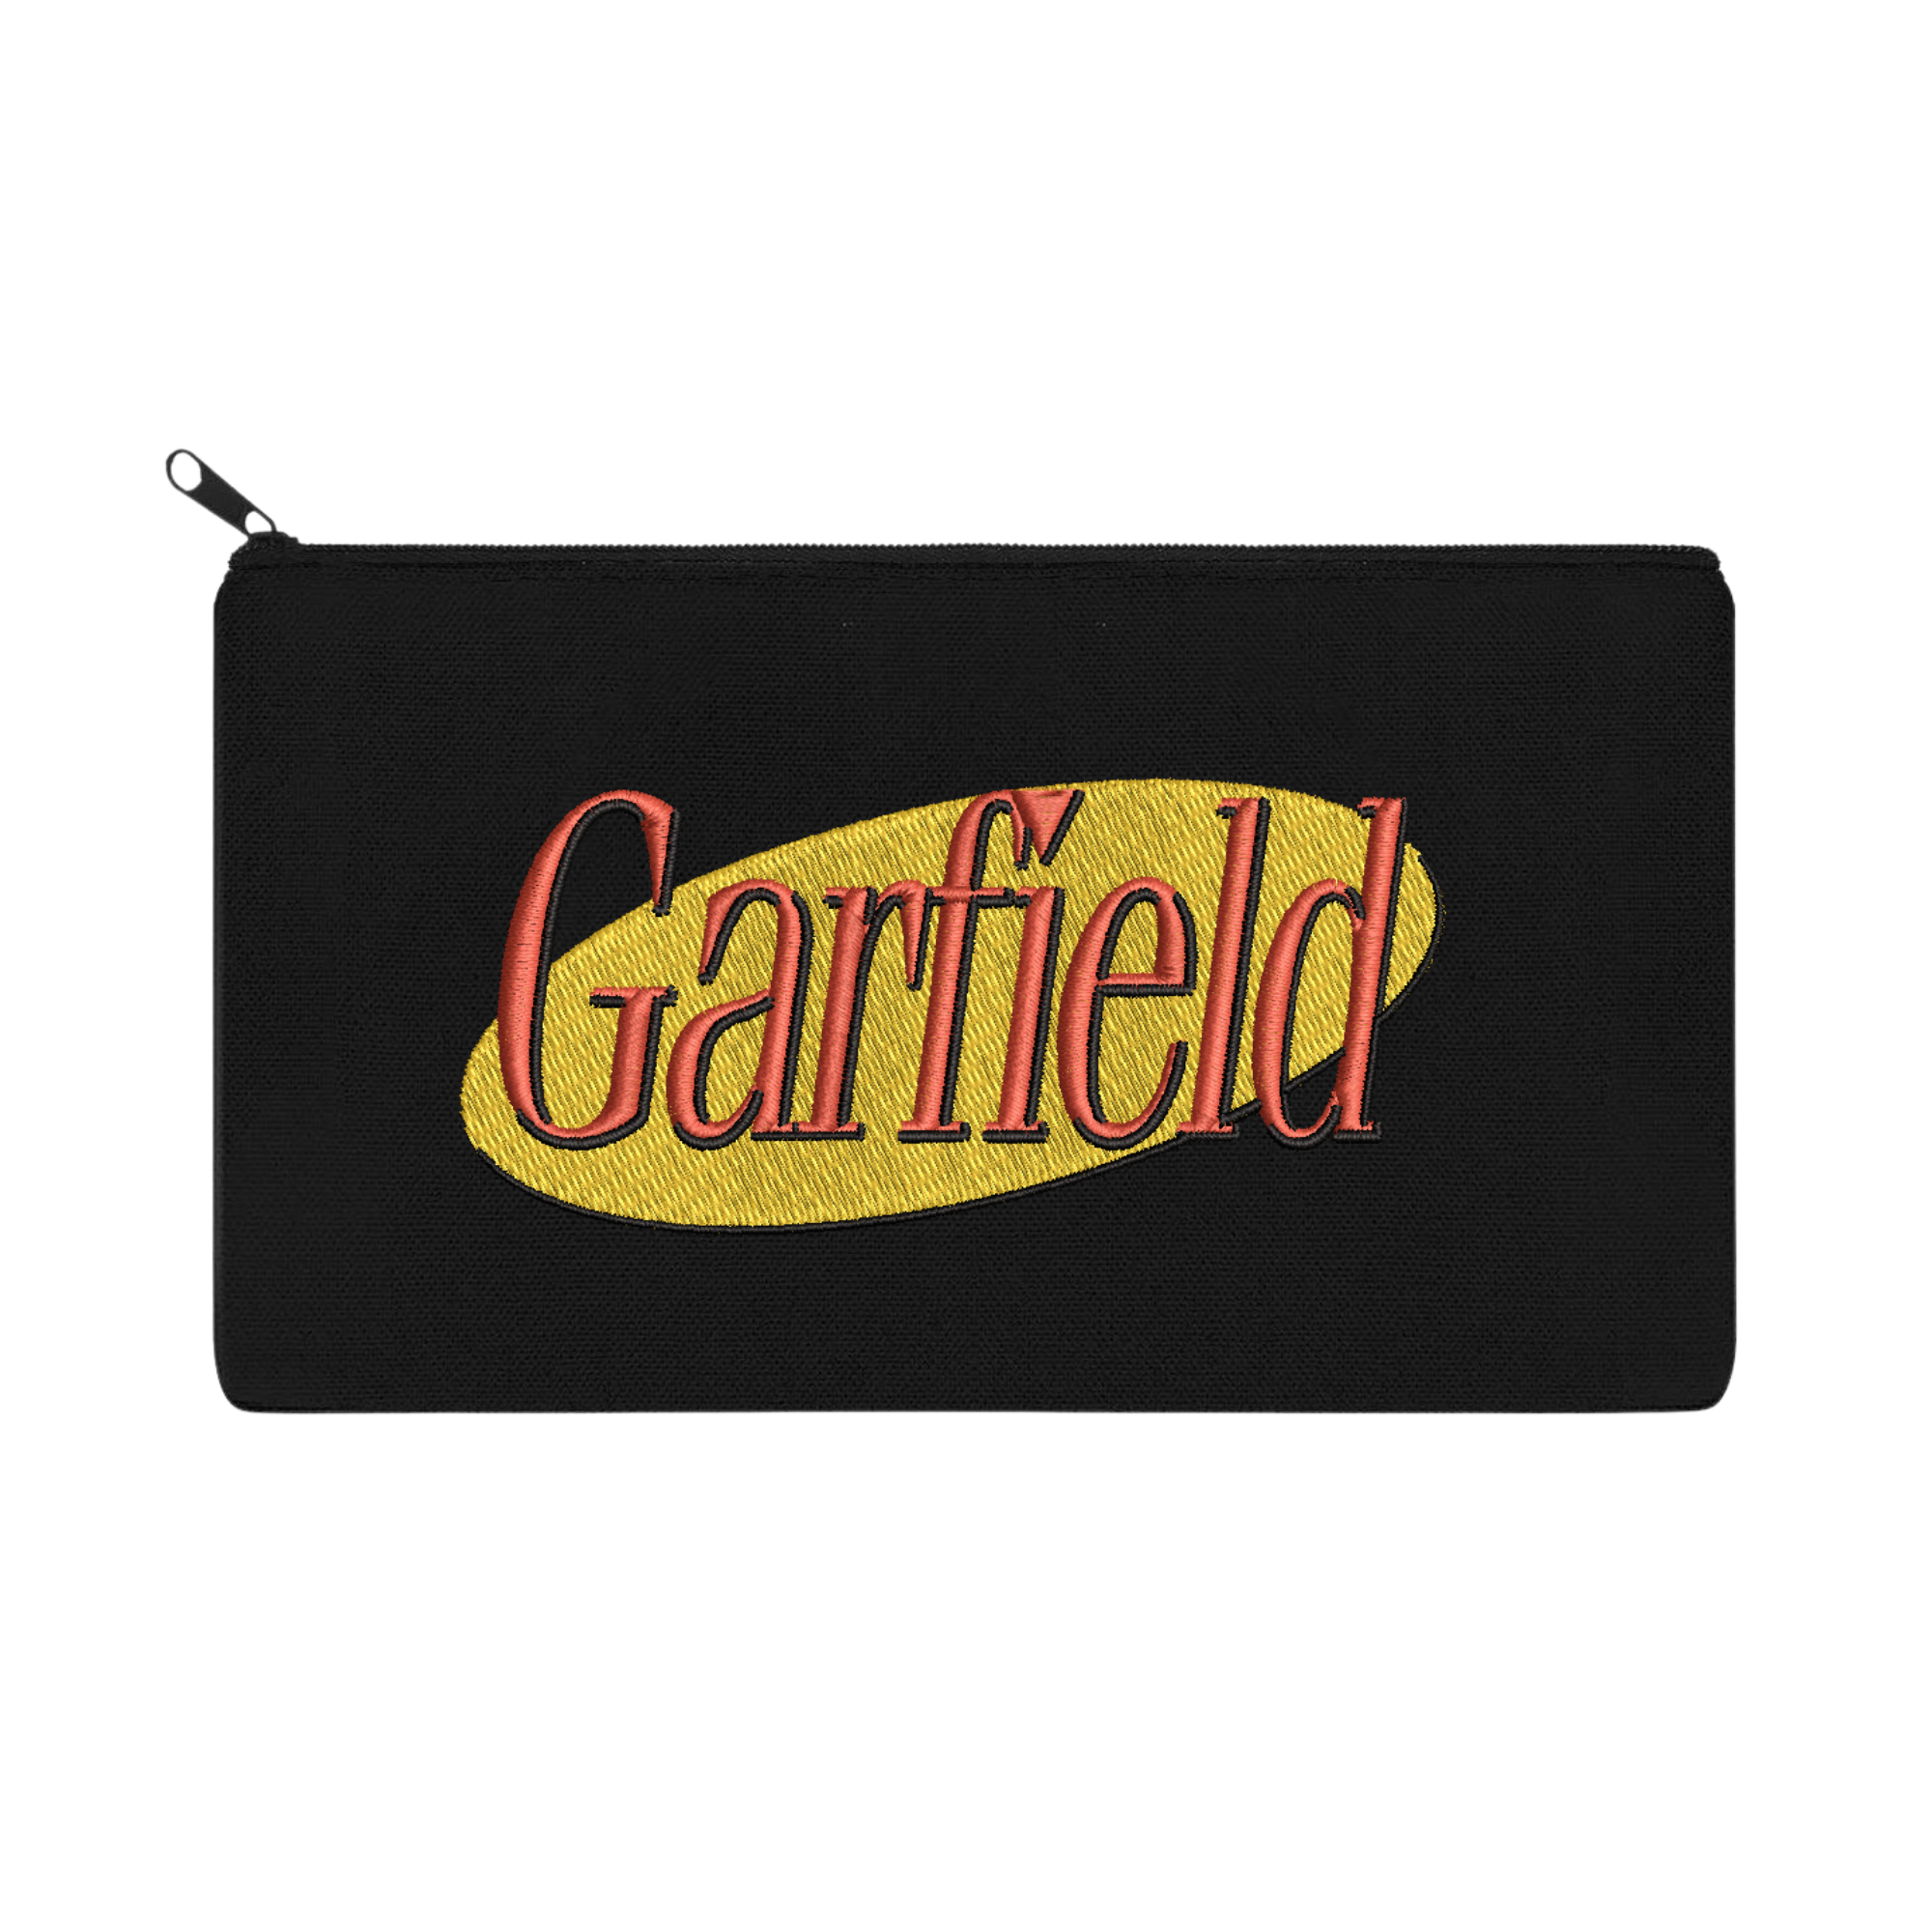 Garfield Seinfeld Crossover Episode Multipurpose Zipper Pouch Bag